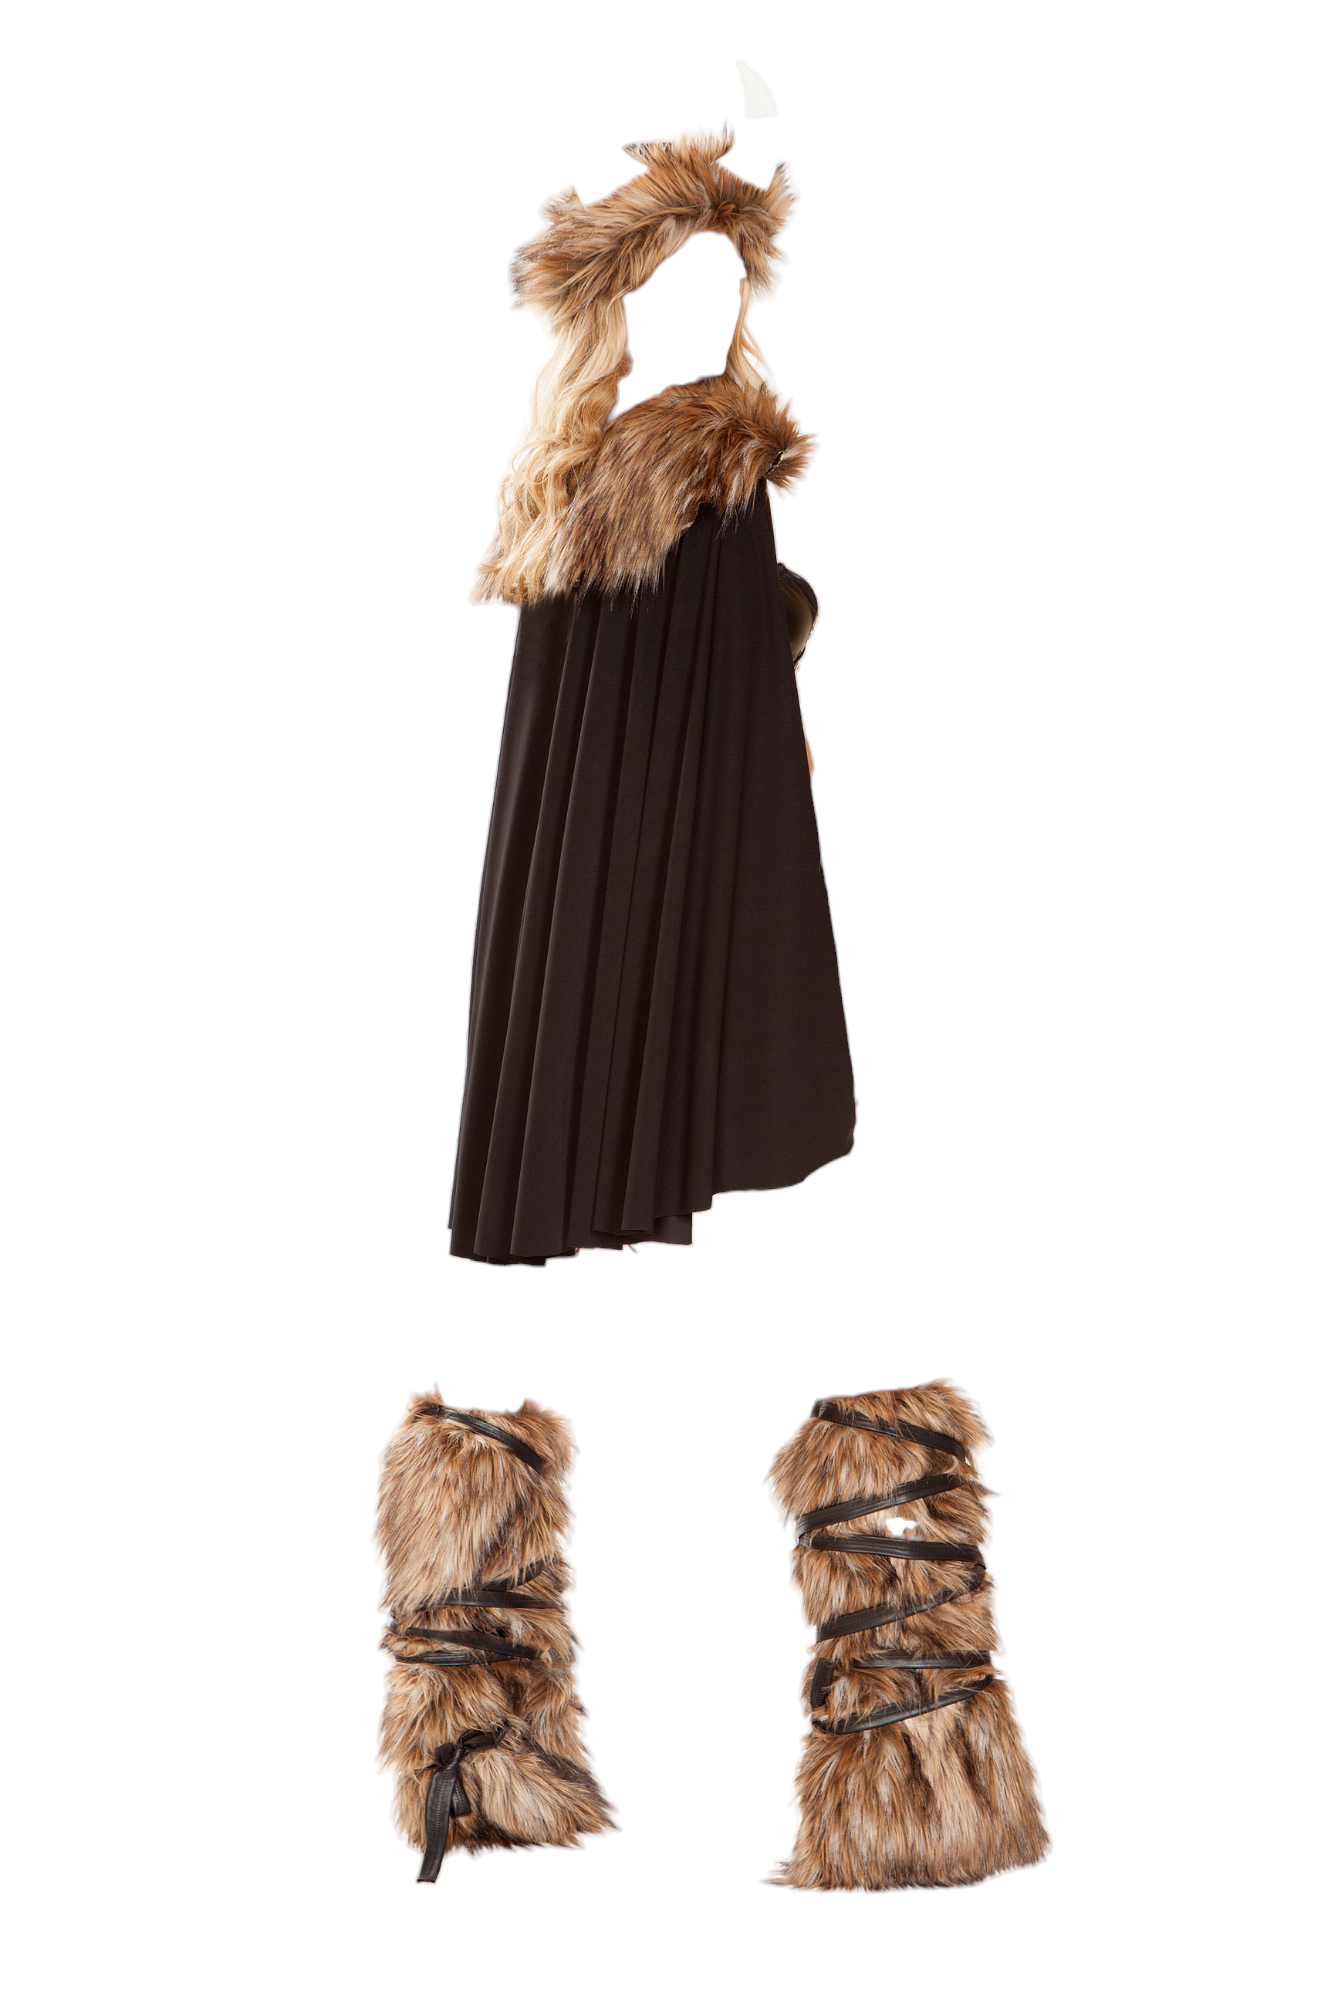 Roma Costume 4 PC Viking Warrior Corset Top with Skirt & Cape Black/Beige